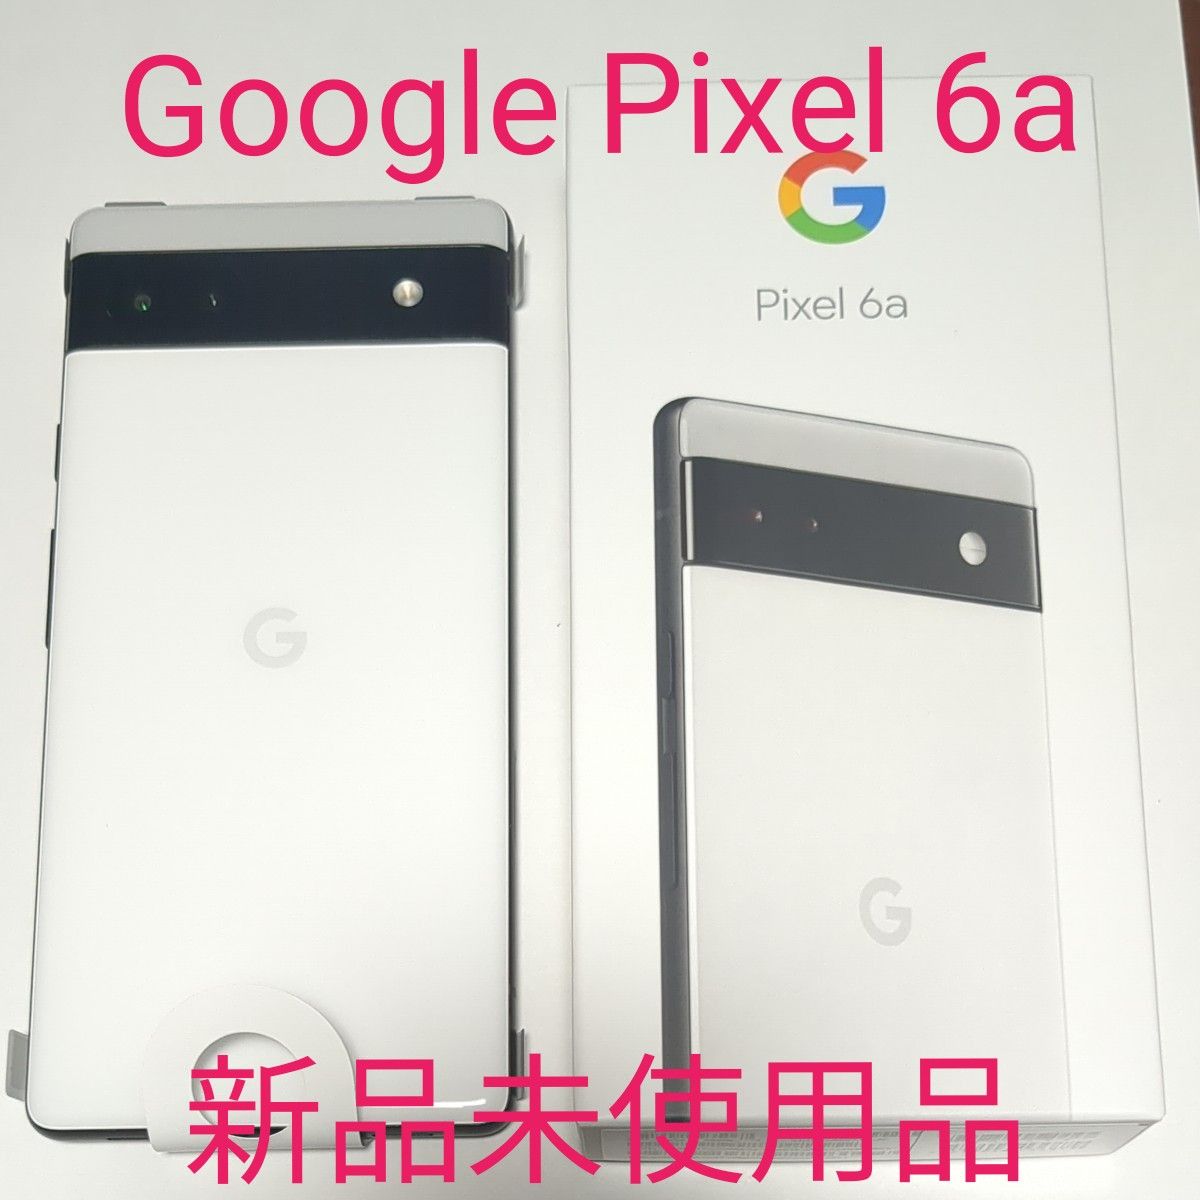 Google　Pixel　6a　チョーク　新品未使用　おまけ付き